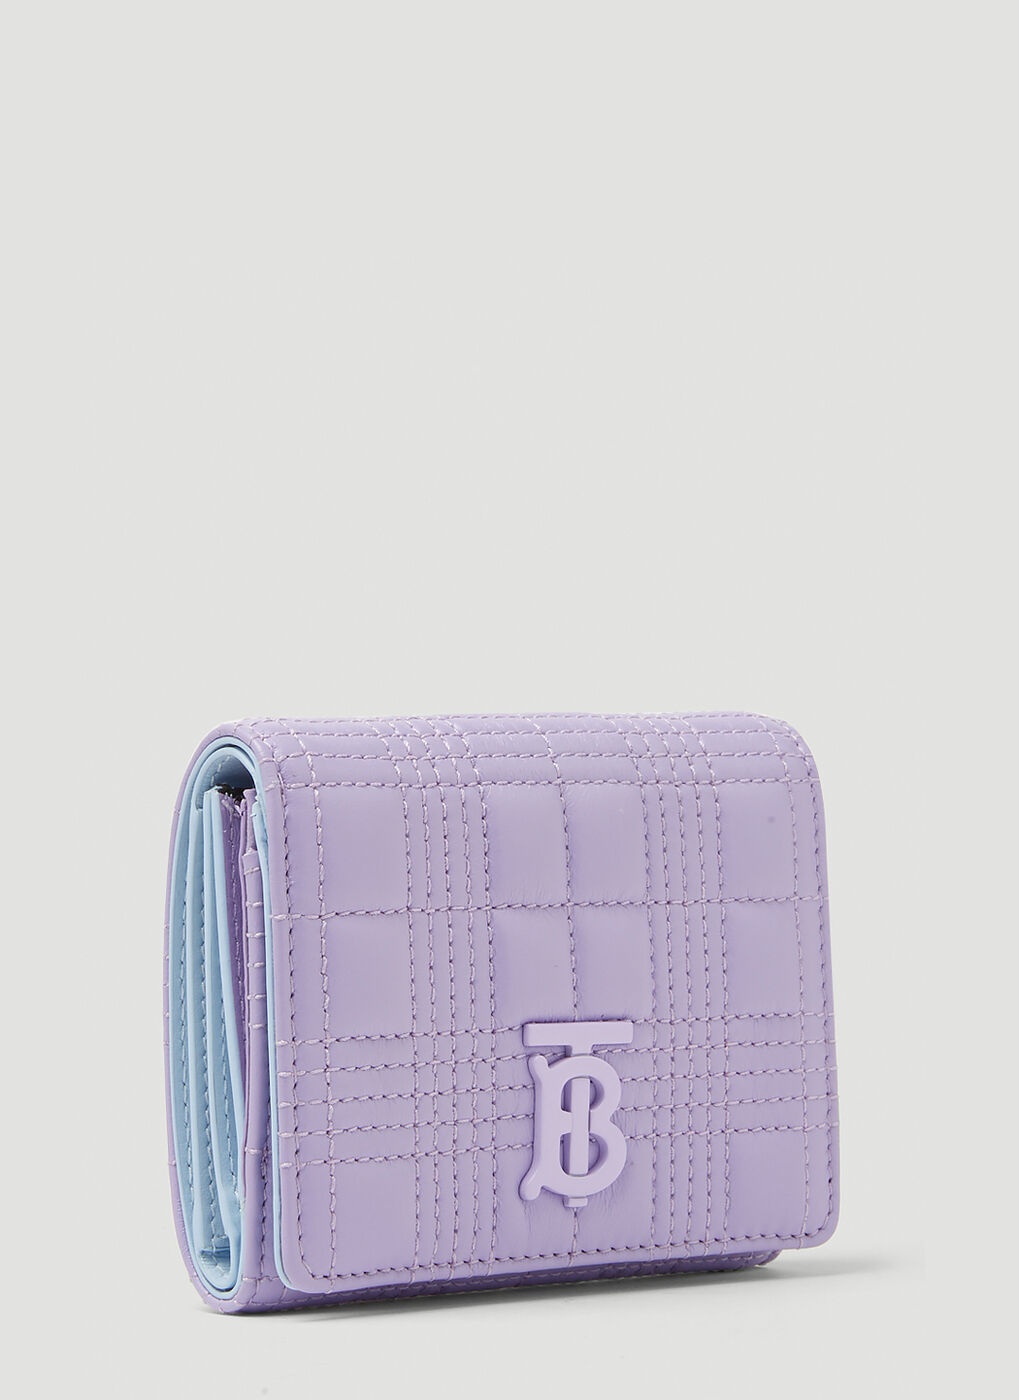 Burberry Lola Tri Fold Wallet